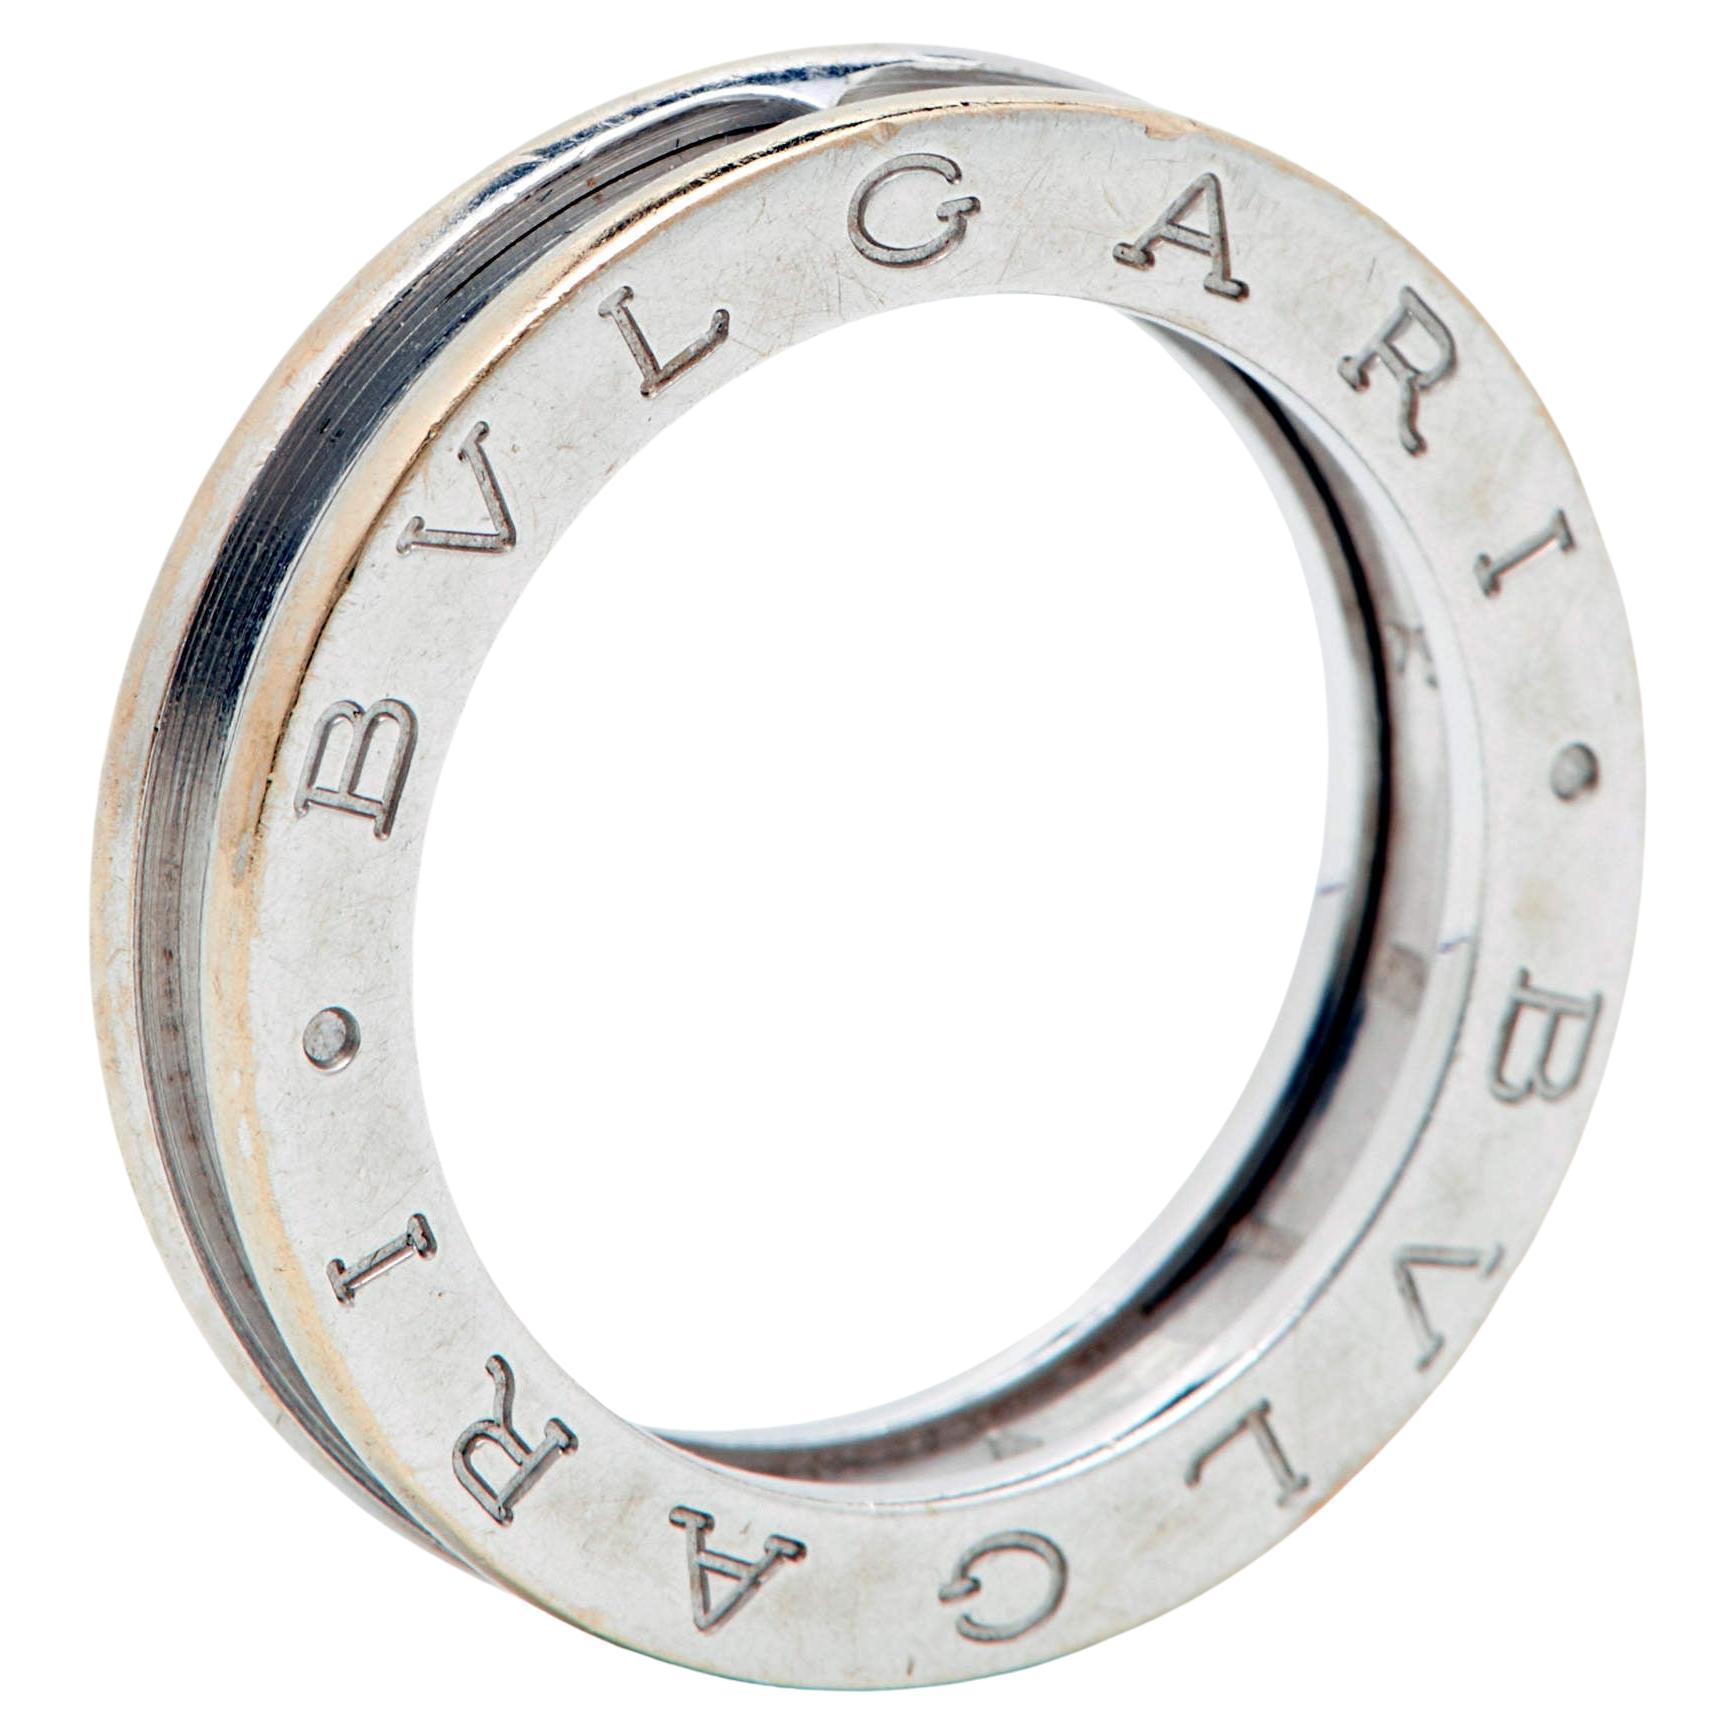 Bvlgari B.Zero1, bague à 1 anneau en or blanc 18 carats, taille 54